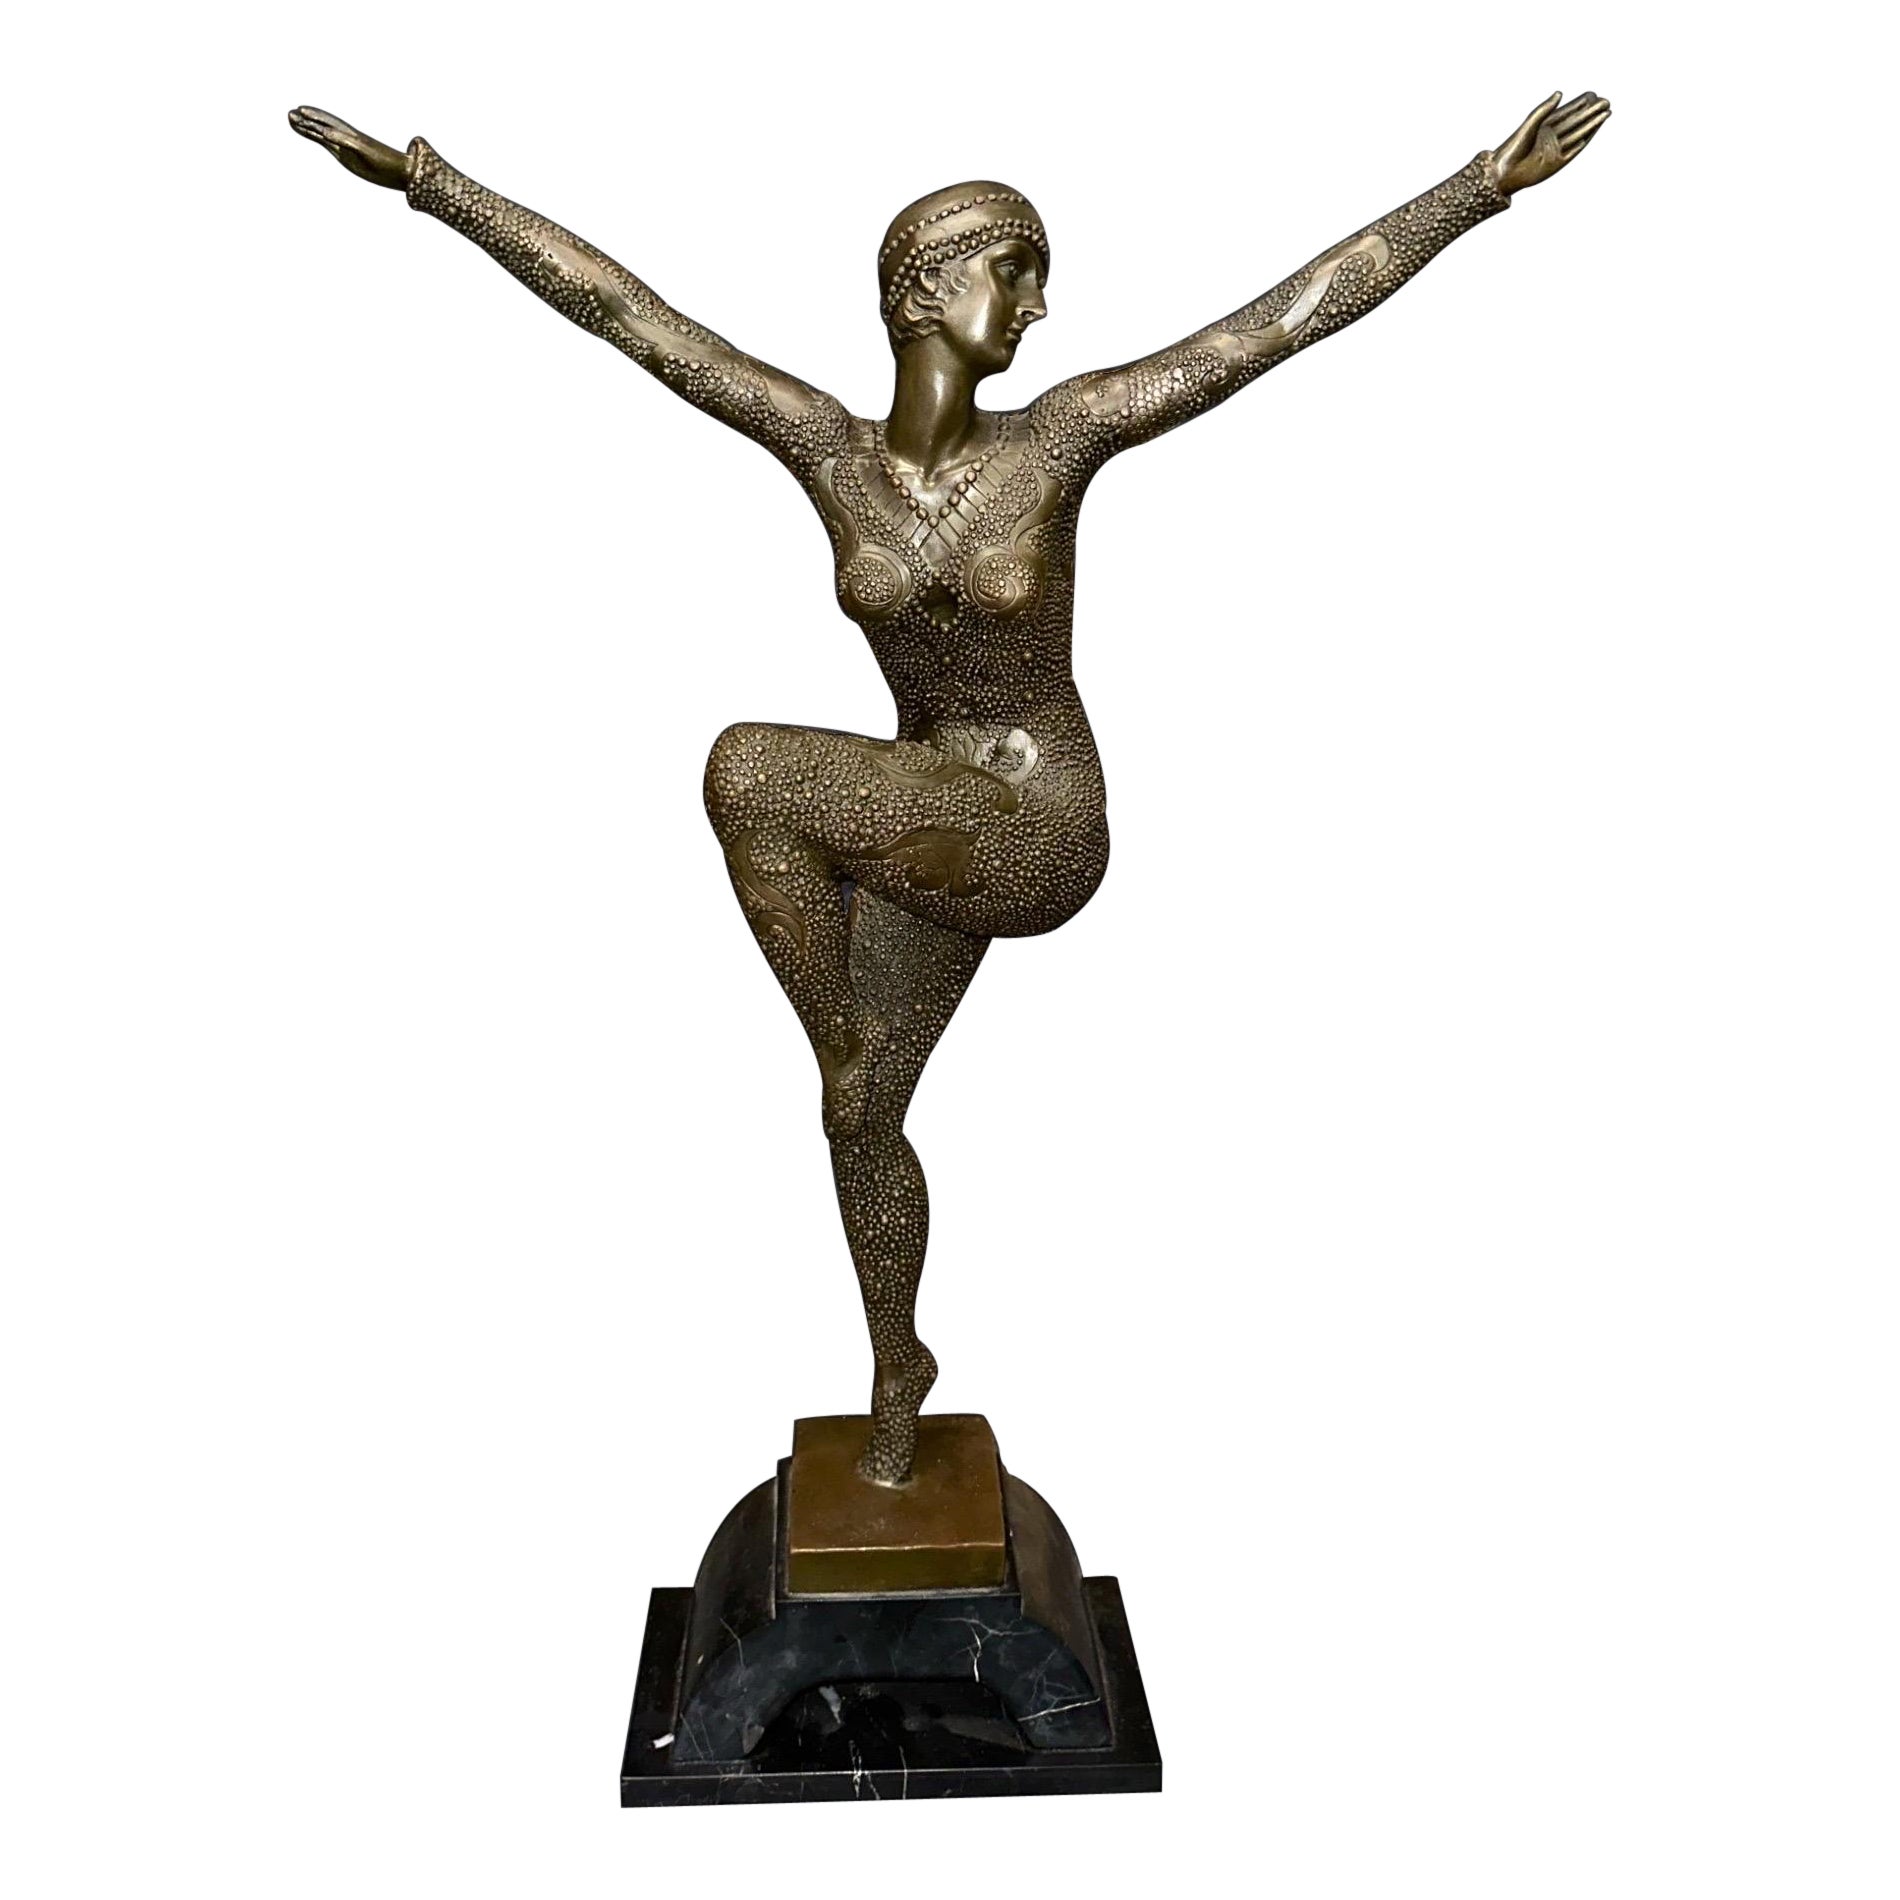 Signed Art Deco After Demetre Chiparus Bronze Sculpture "Kapurthala Dancer"